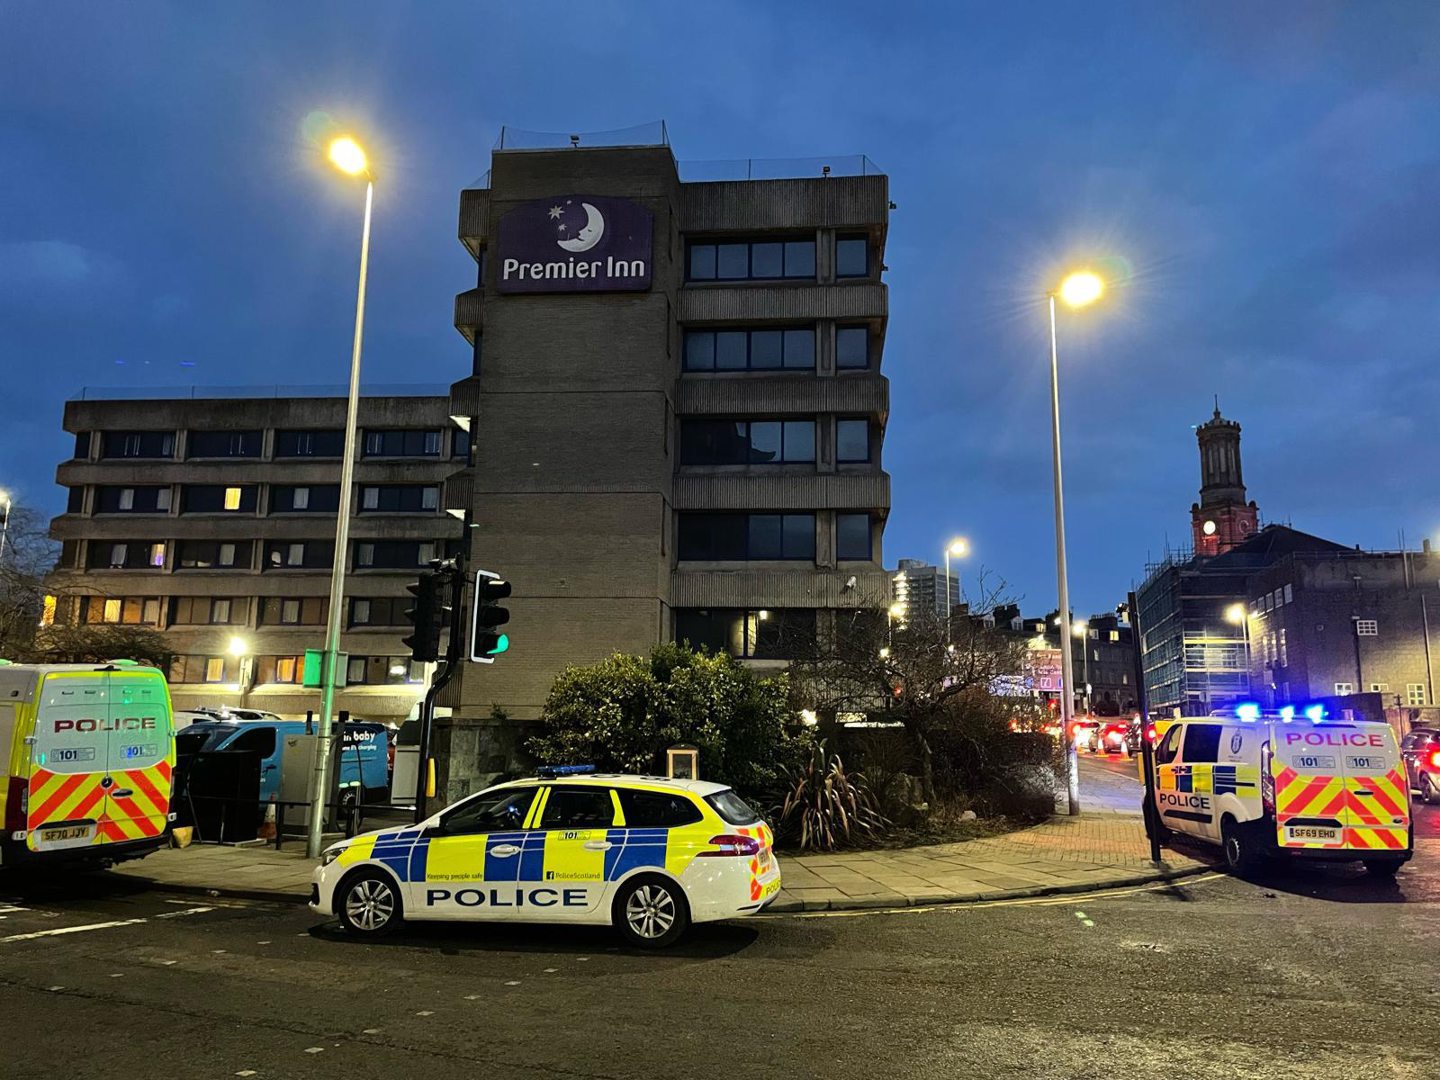 Emergency vehicles in attendance outside the Premier Inn hotel in Aberdeen city centre.